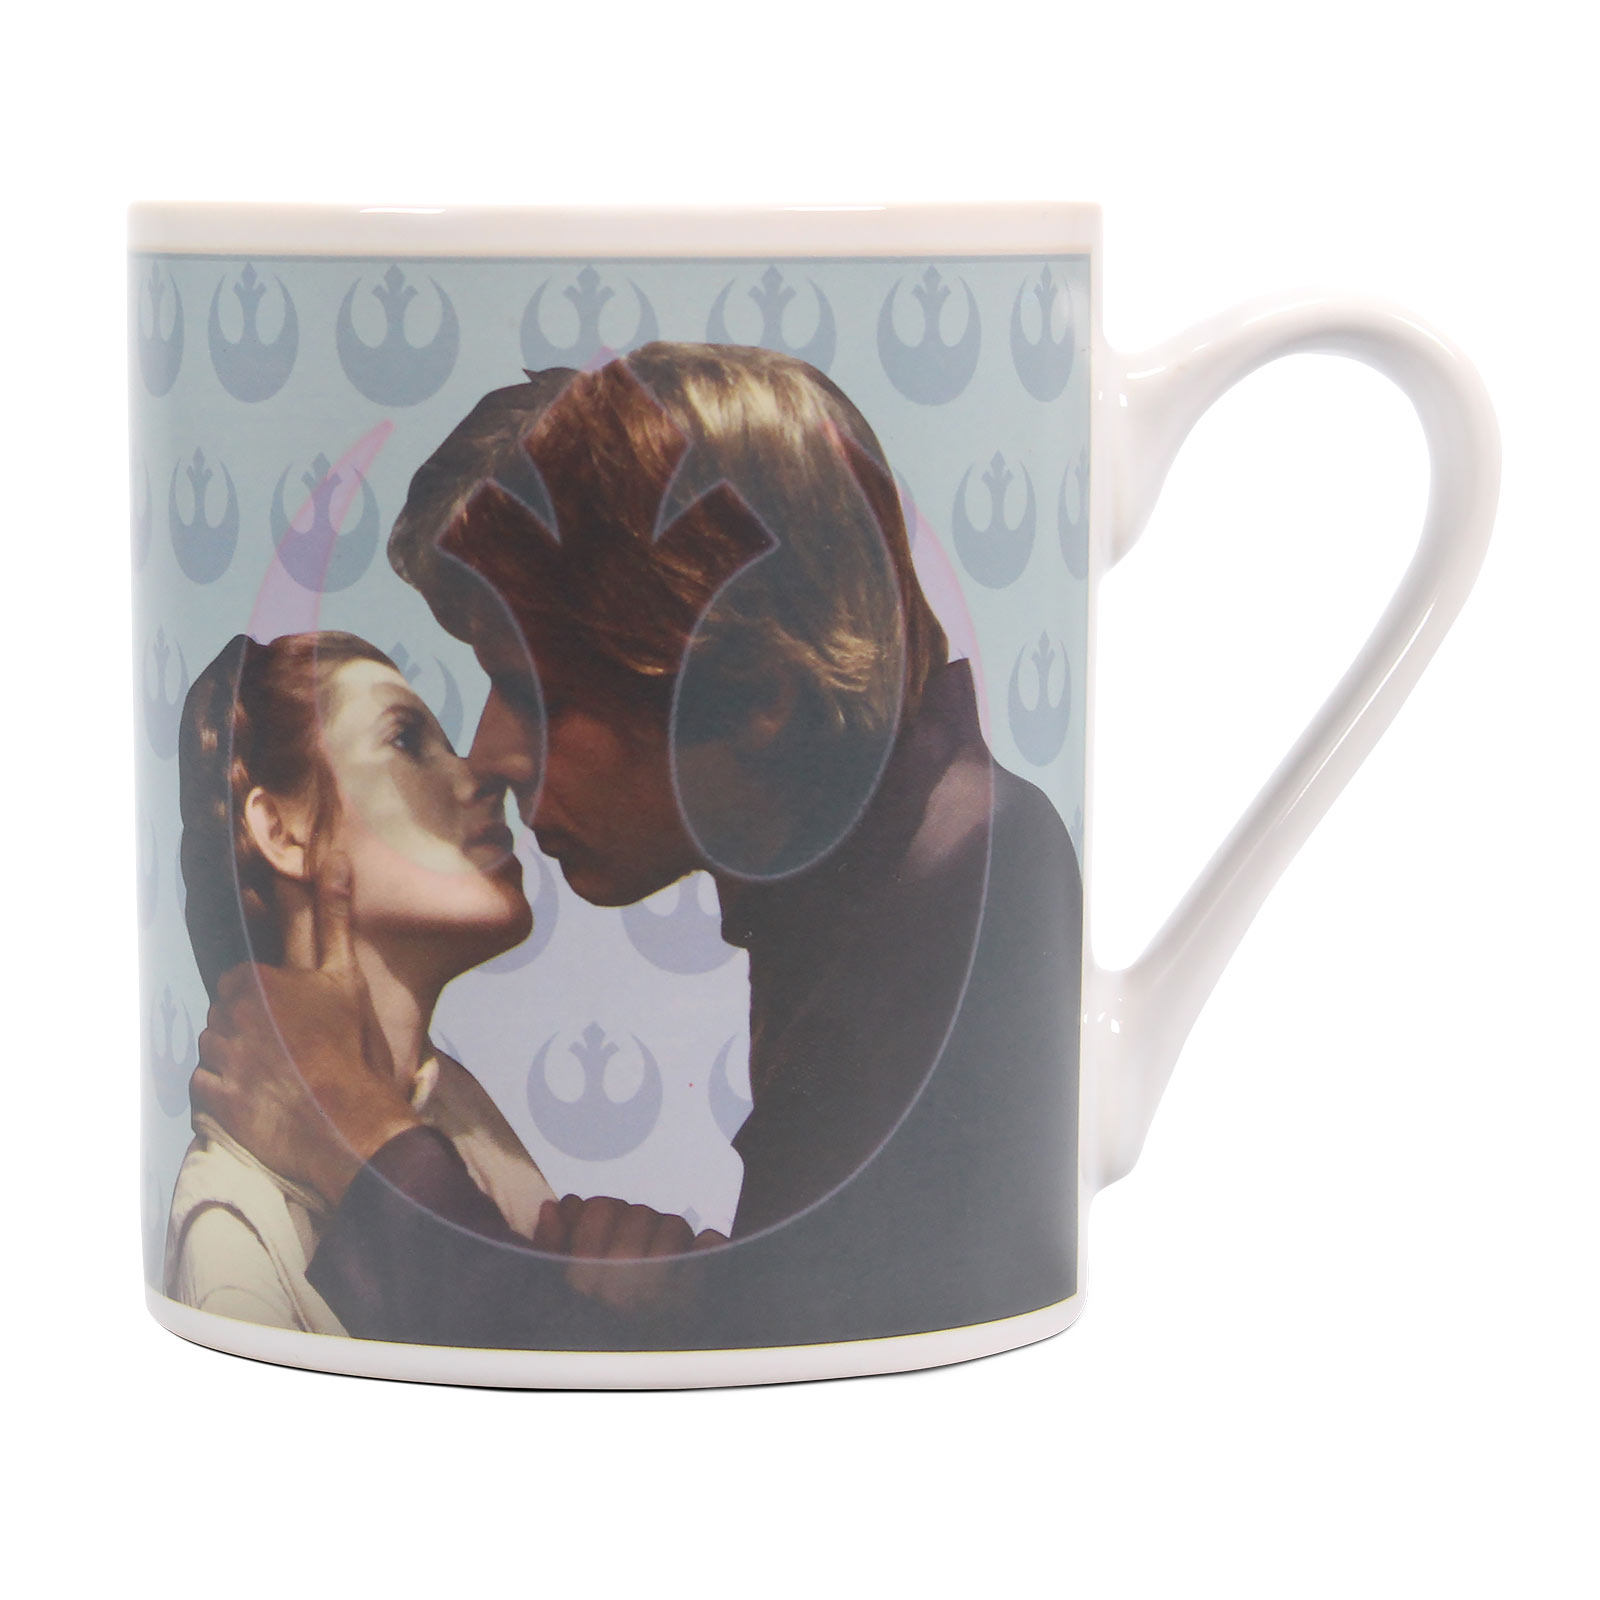 Star Wars - Leia and Han Solo thermo effect mug